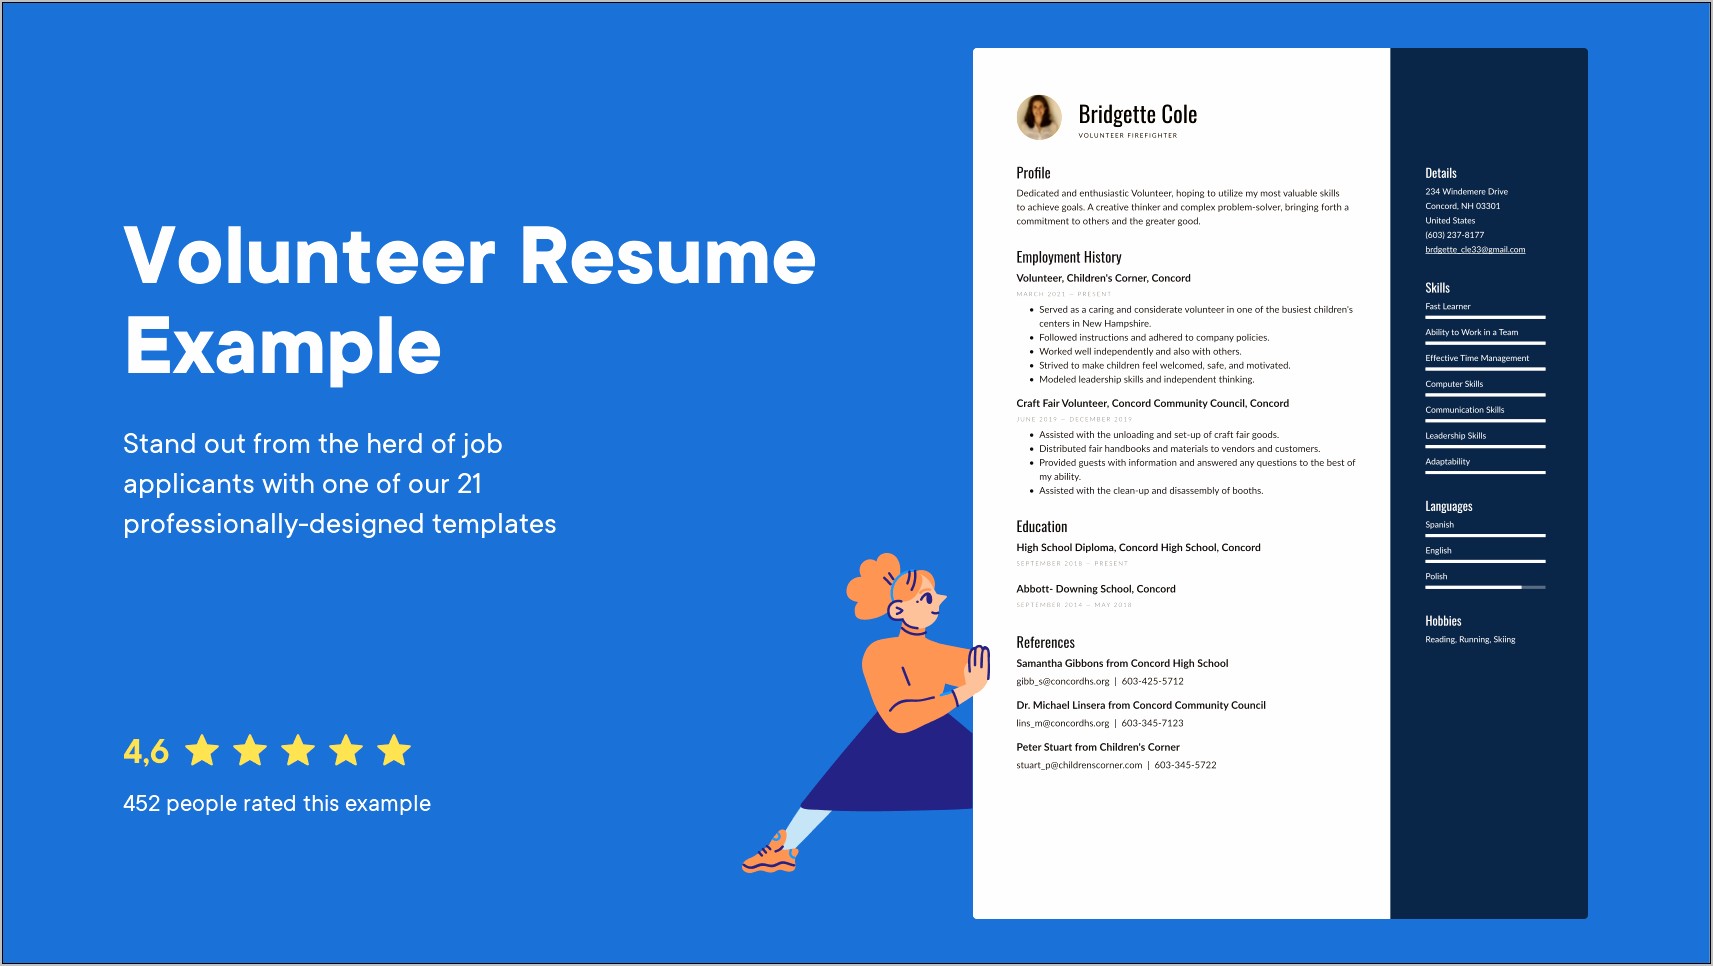 Adding Volunteer Work To A Resume